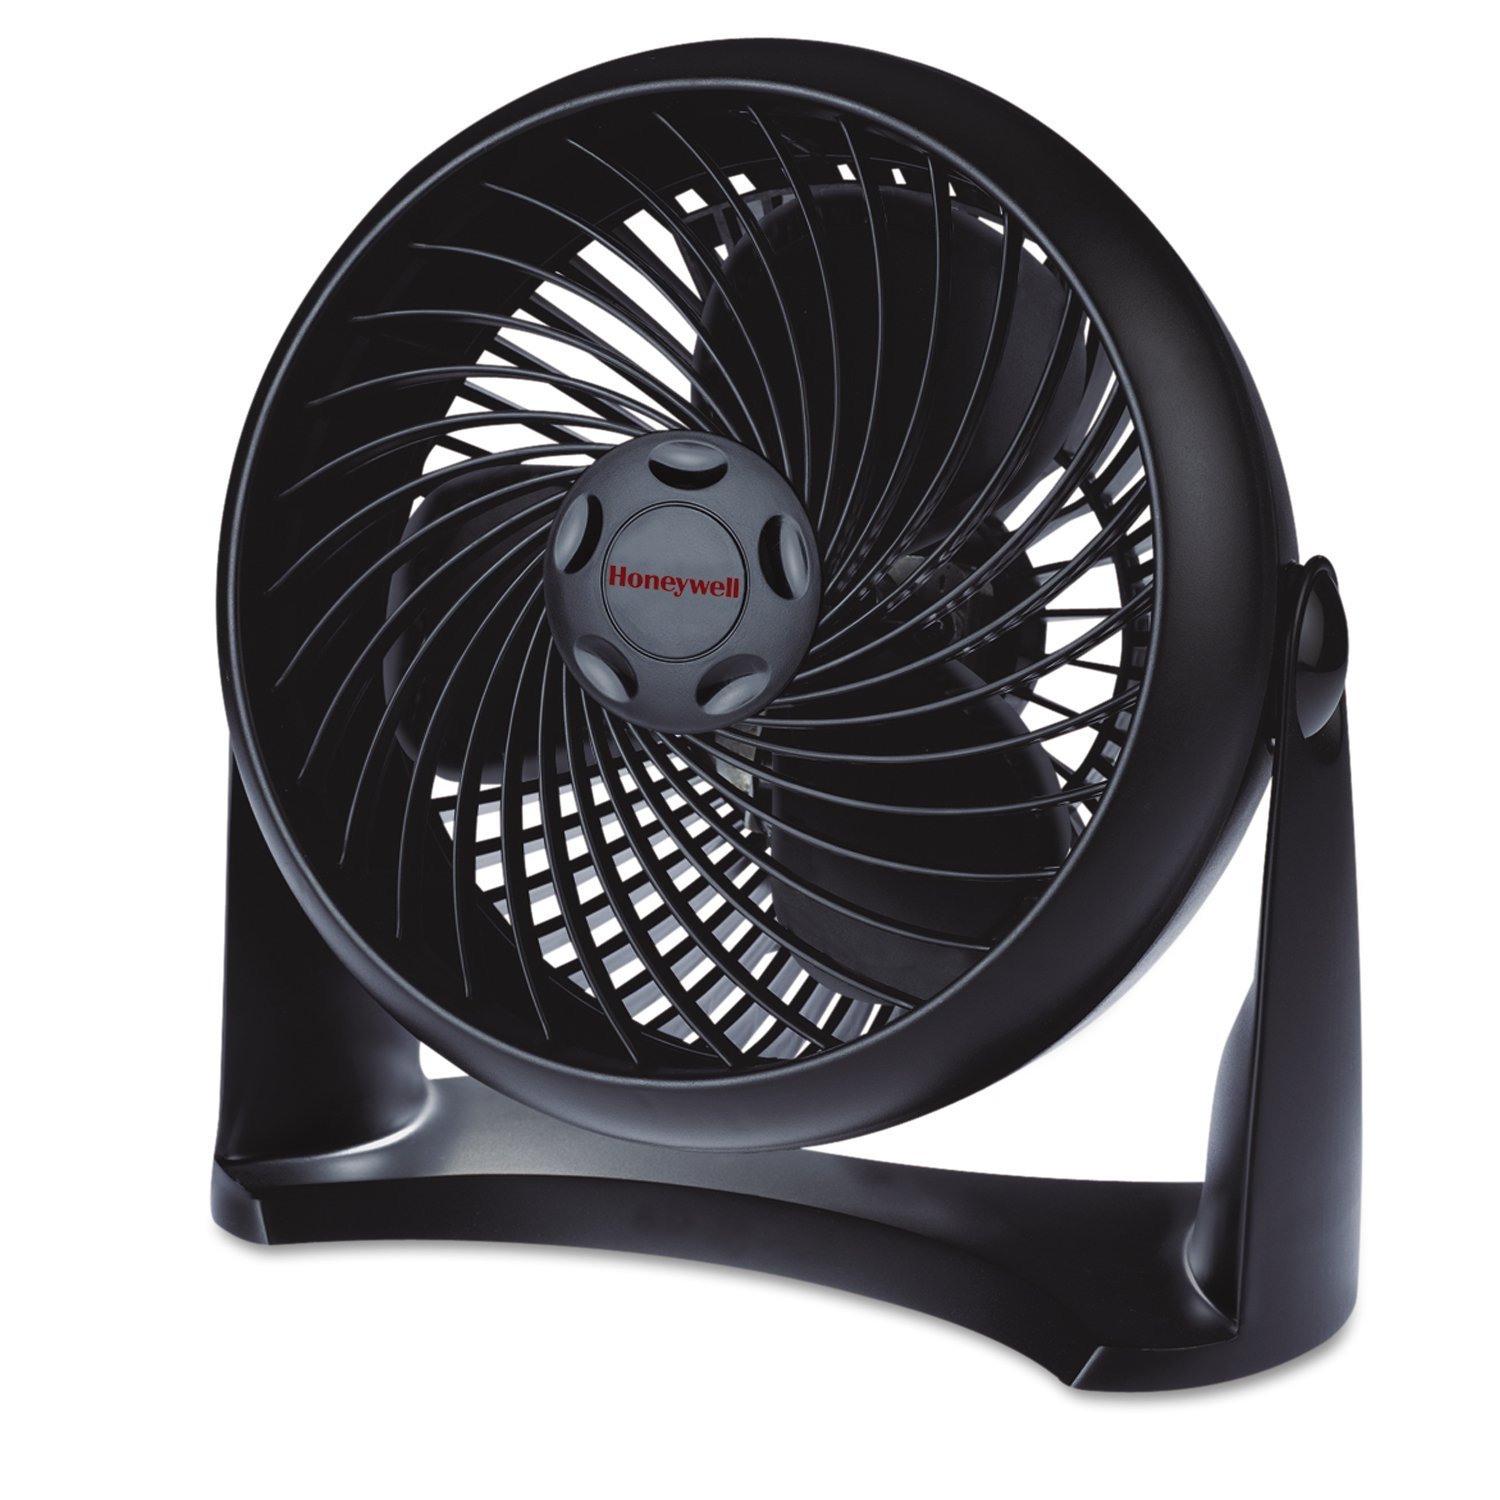 Honeywell Tabletop Air-Circulator Fan – Just $10.25!